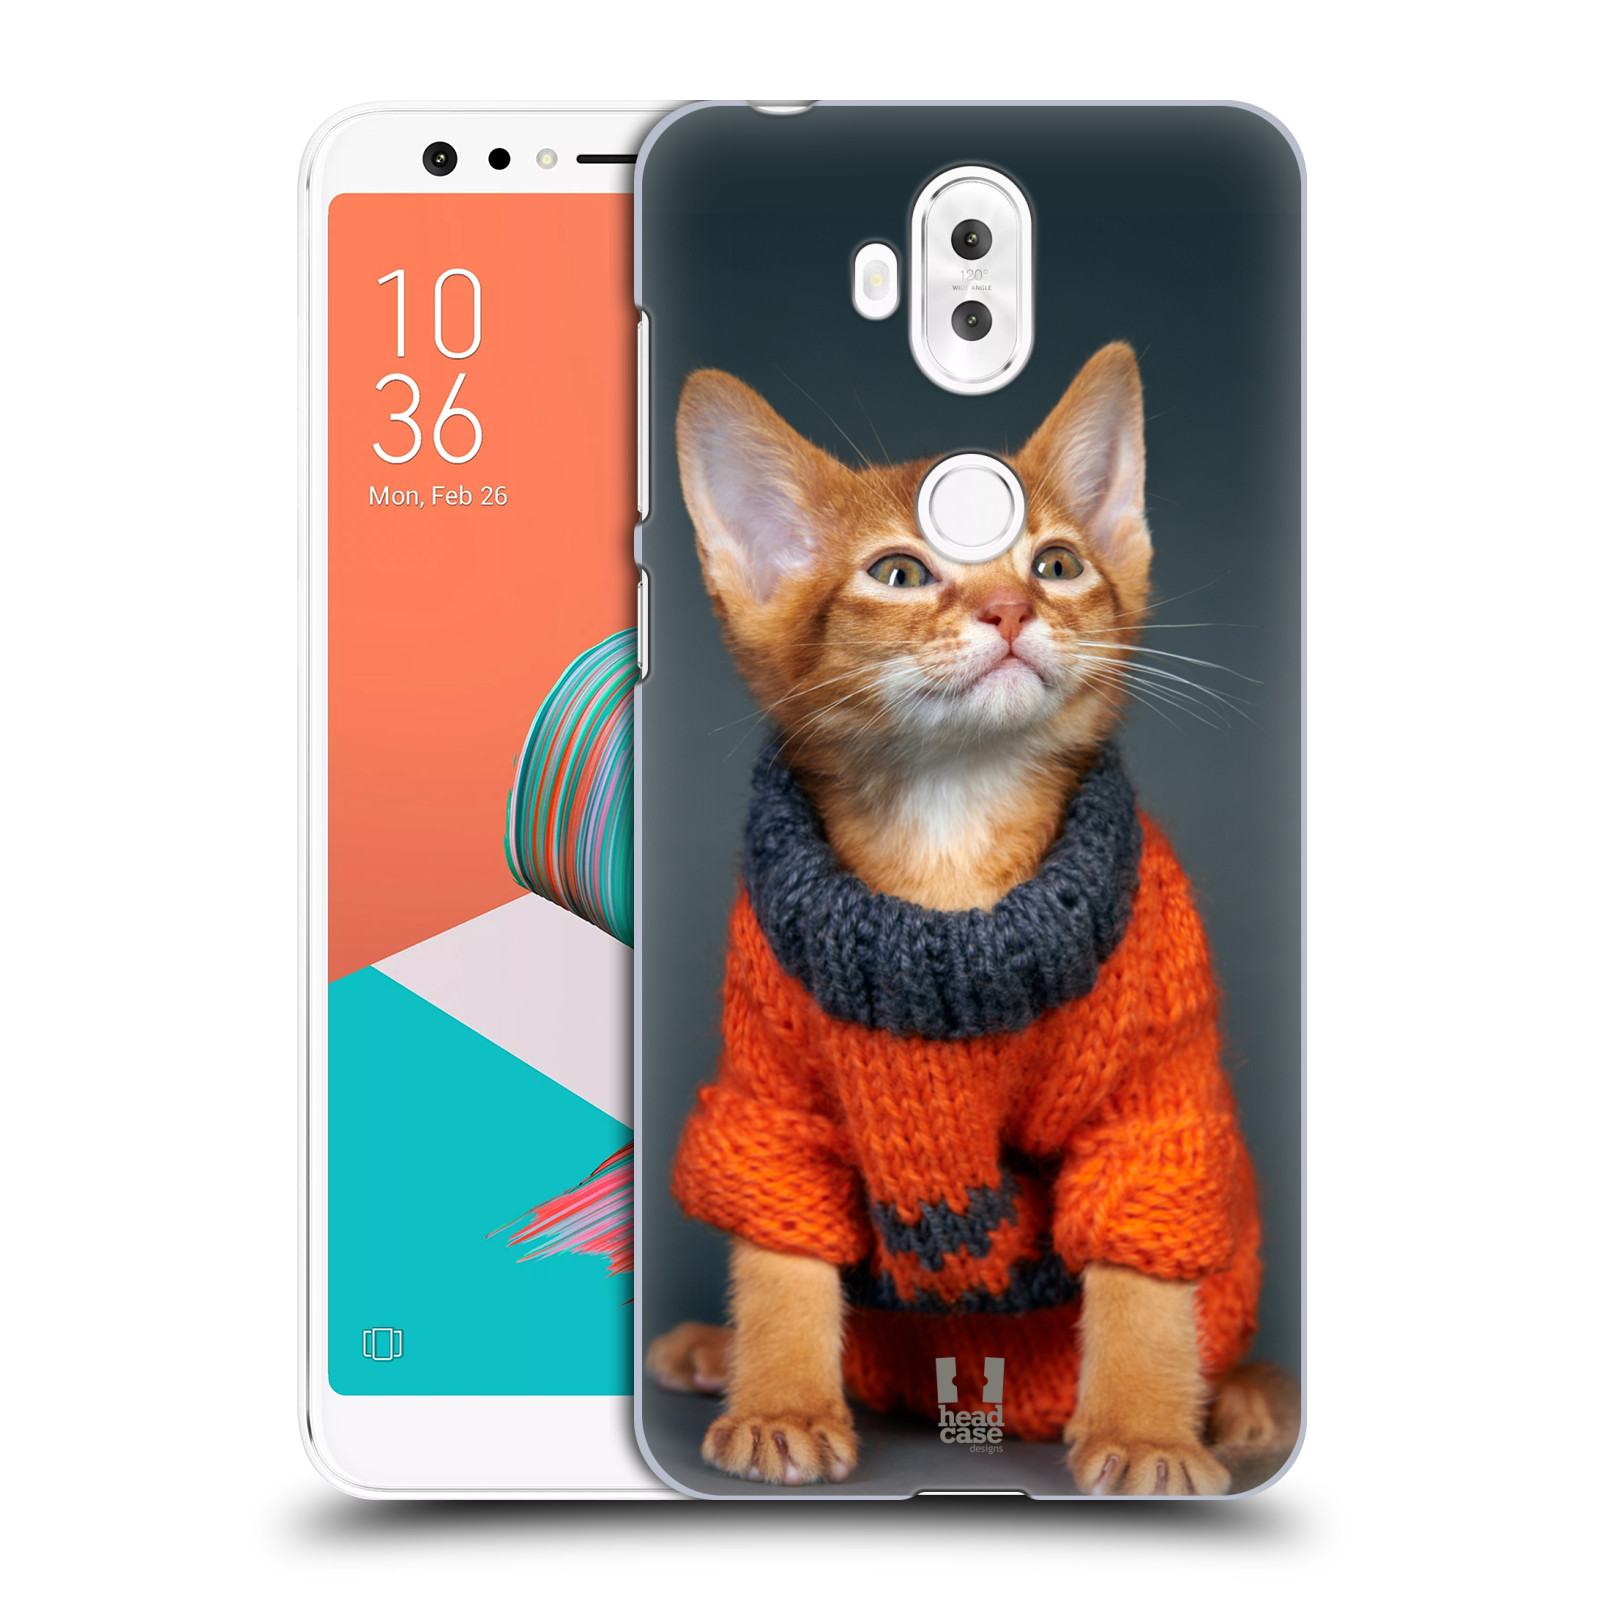 HEAD CASE plastový obal na mobil Asus Zenfone 5 LITE ZC600KL vzor Legrační zvířátka kočička v oranžovém svetru